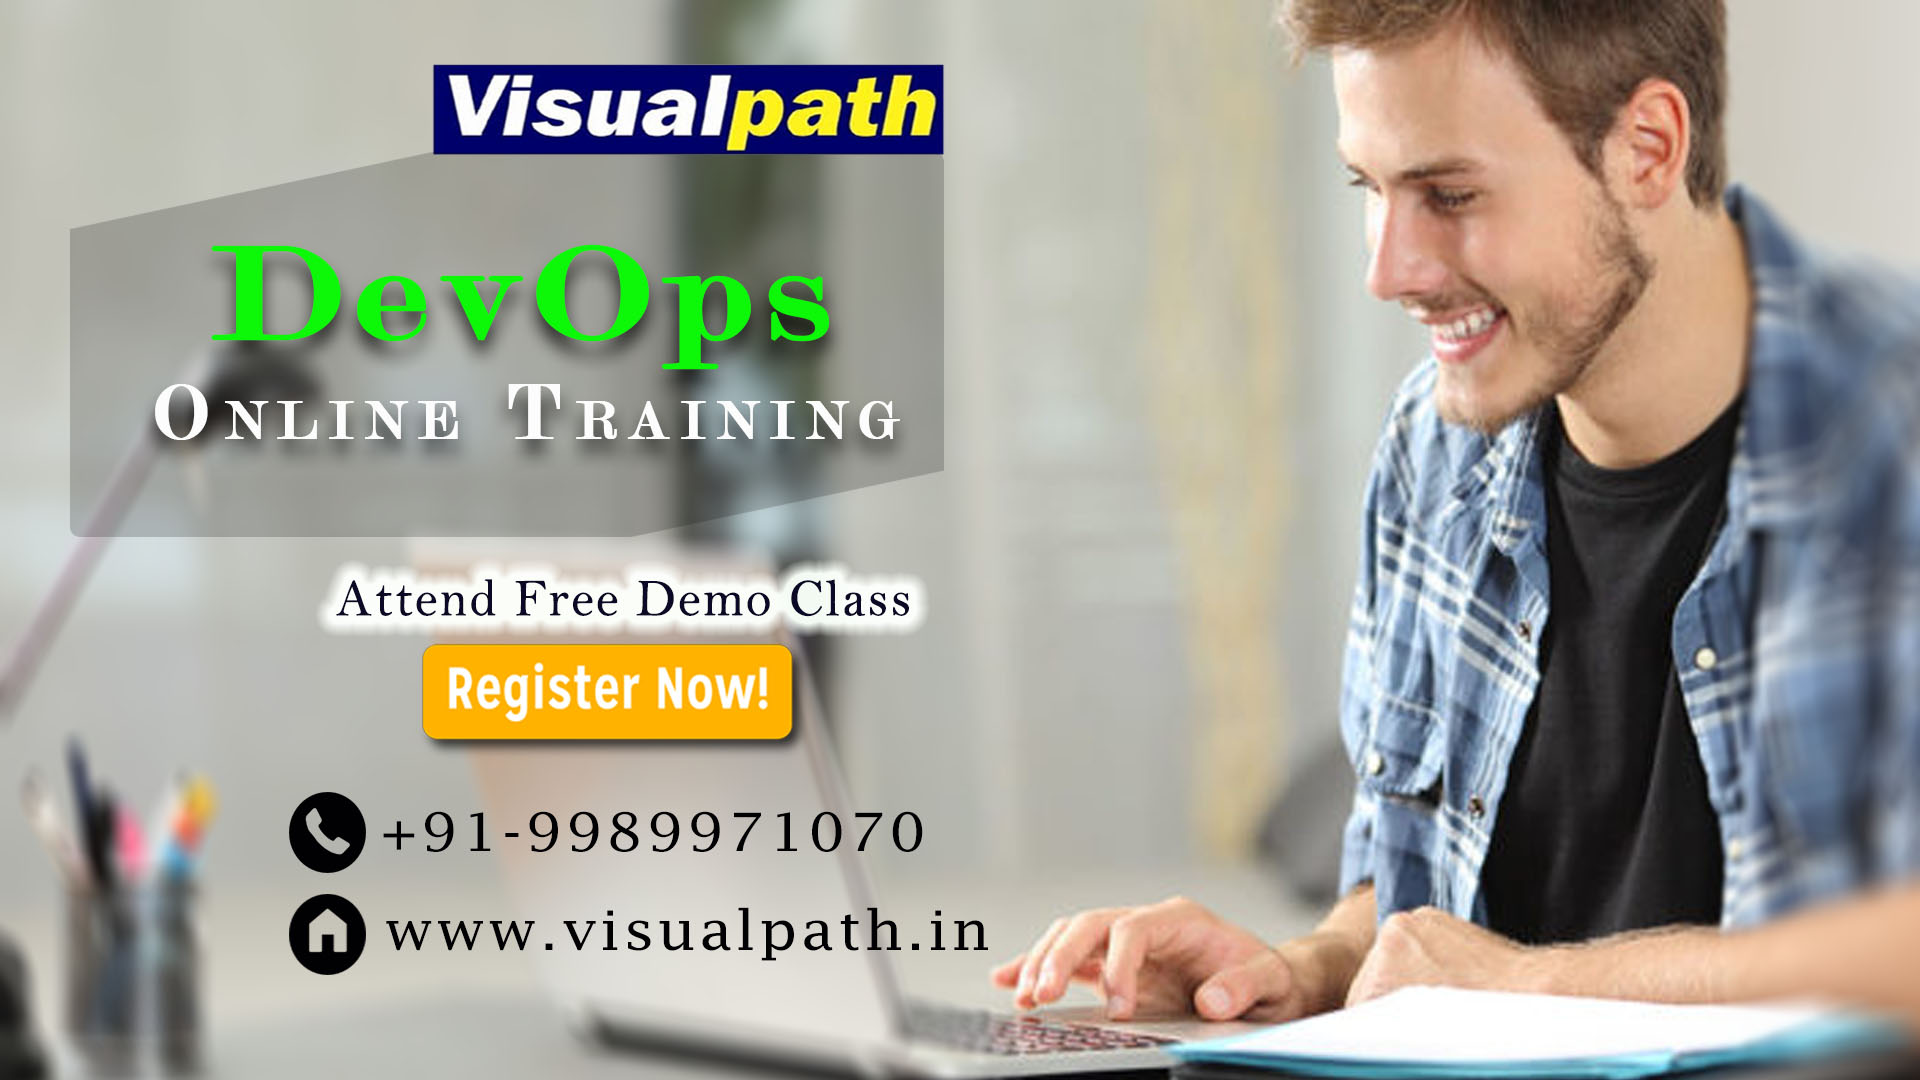 DevOps Certification Online Training Course | DevOps Online Training, Hyderabad, Andhra Pradesh, India